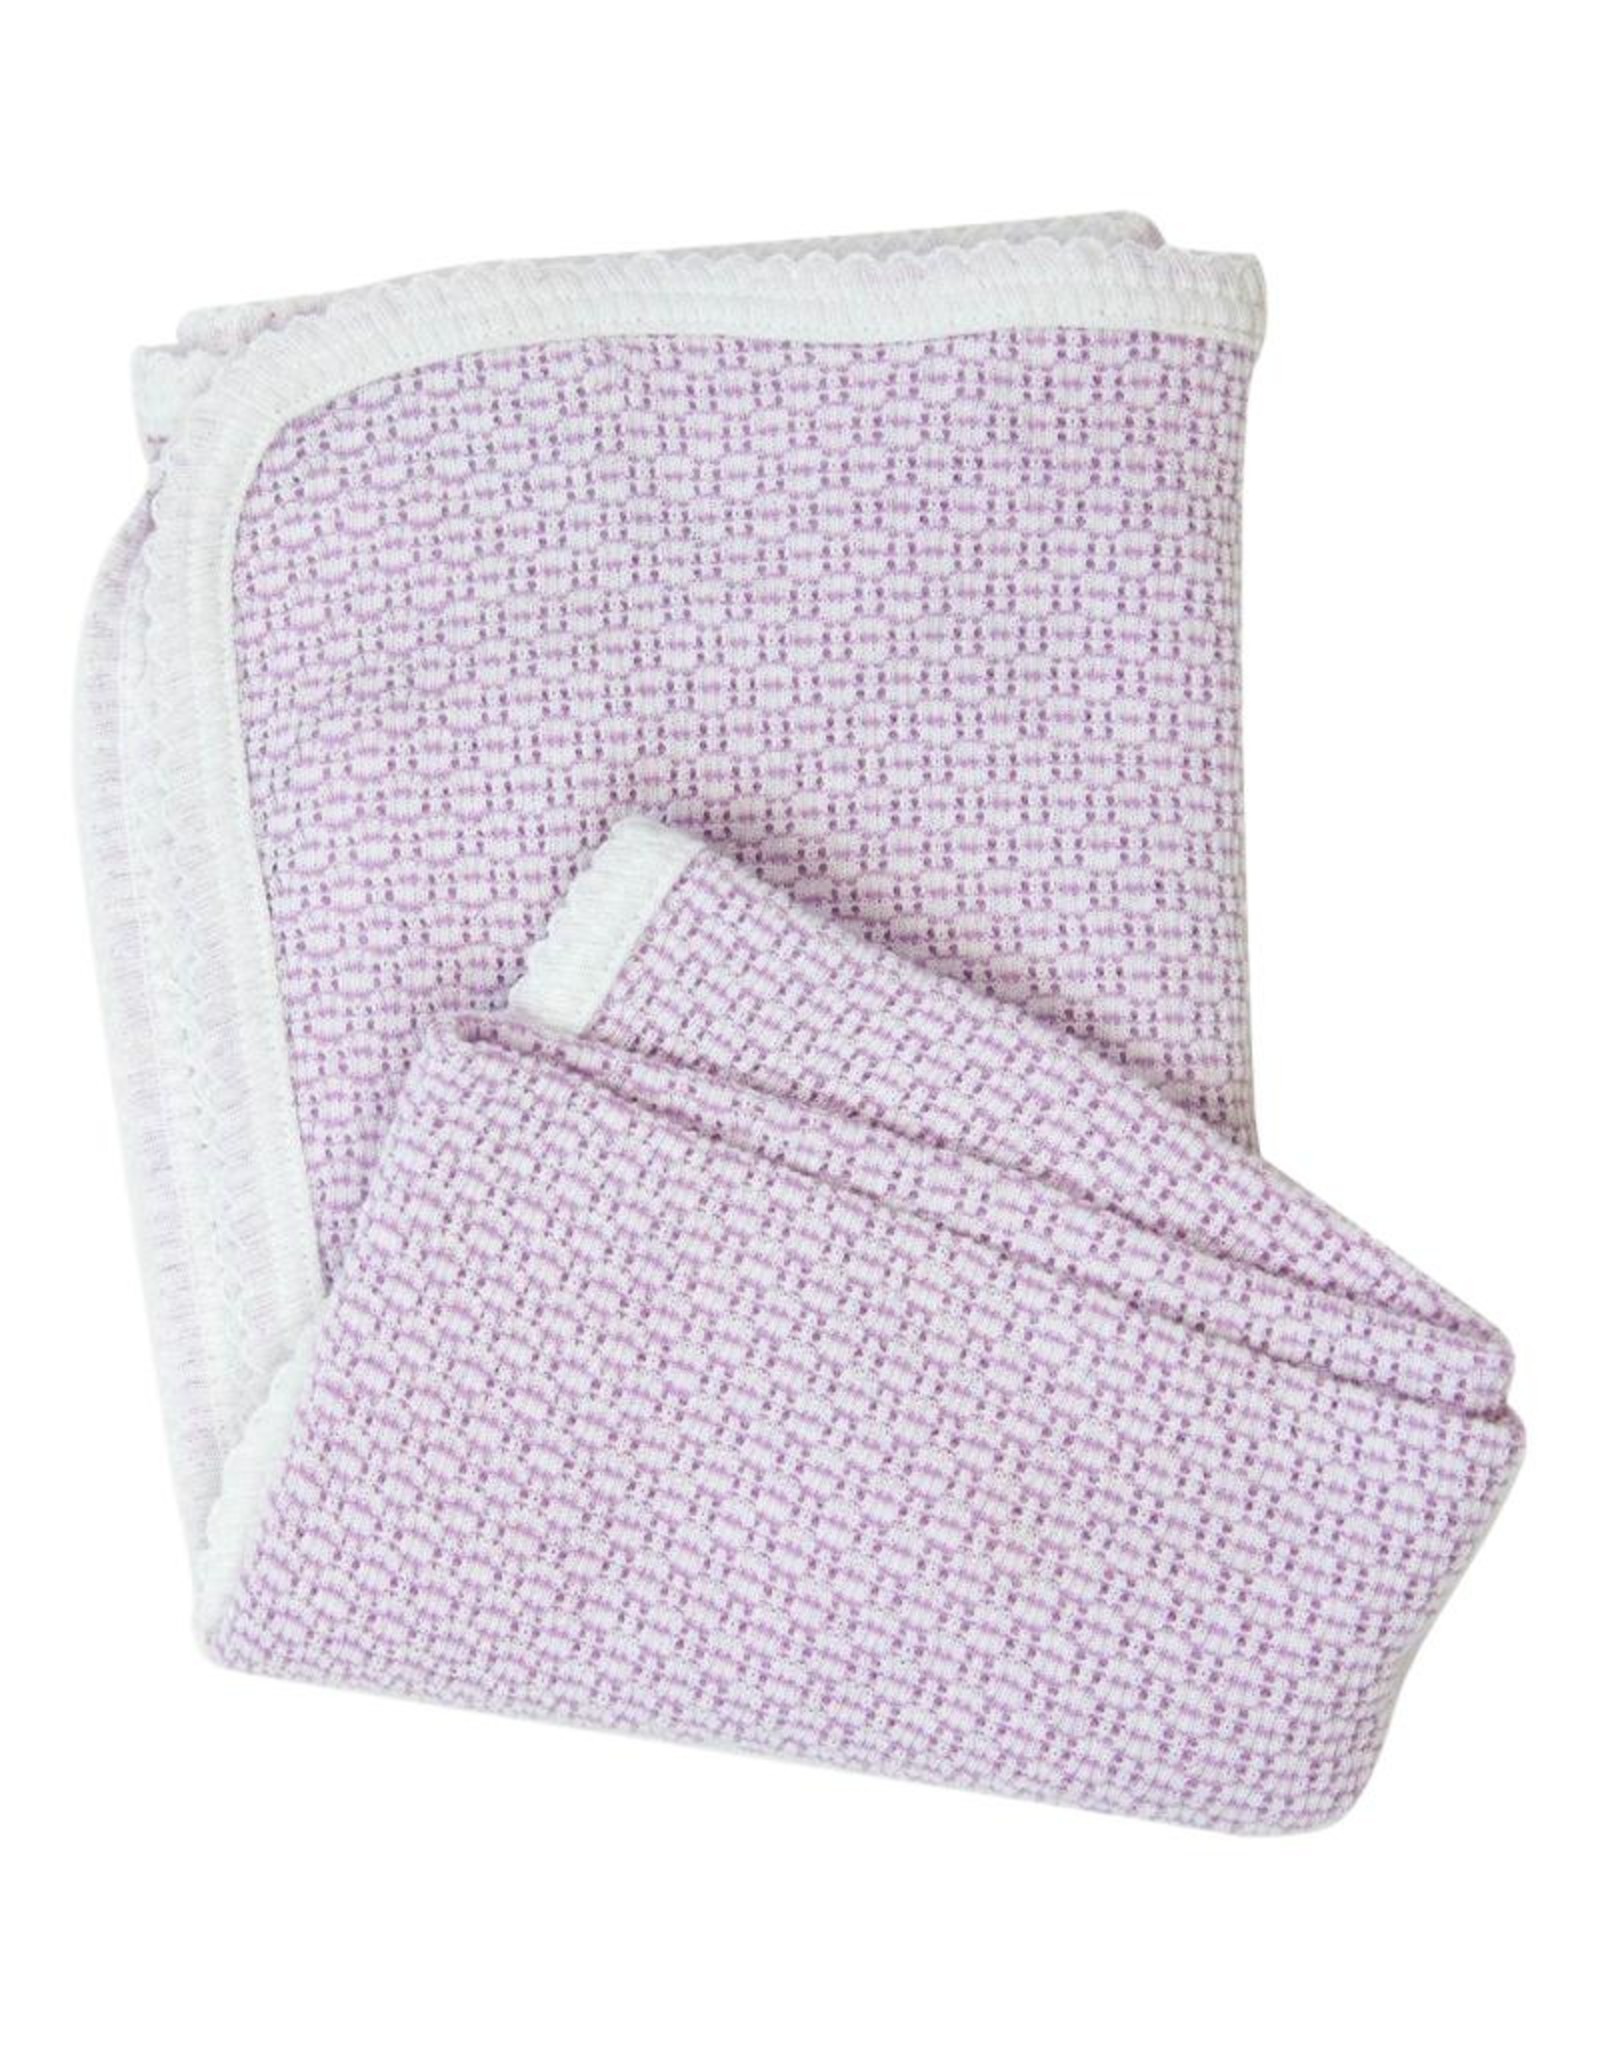 Paty, Inc. 207 Receiving Blanket lavender Solid Stripe